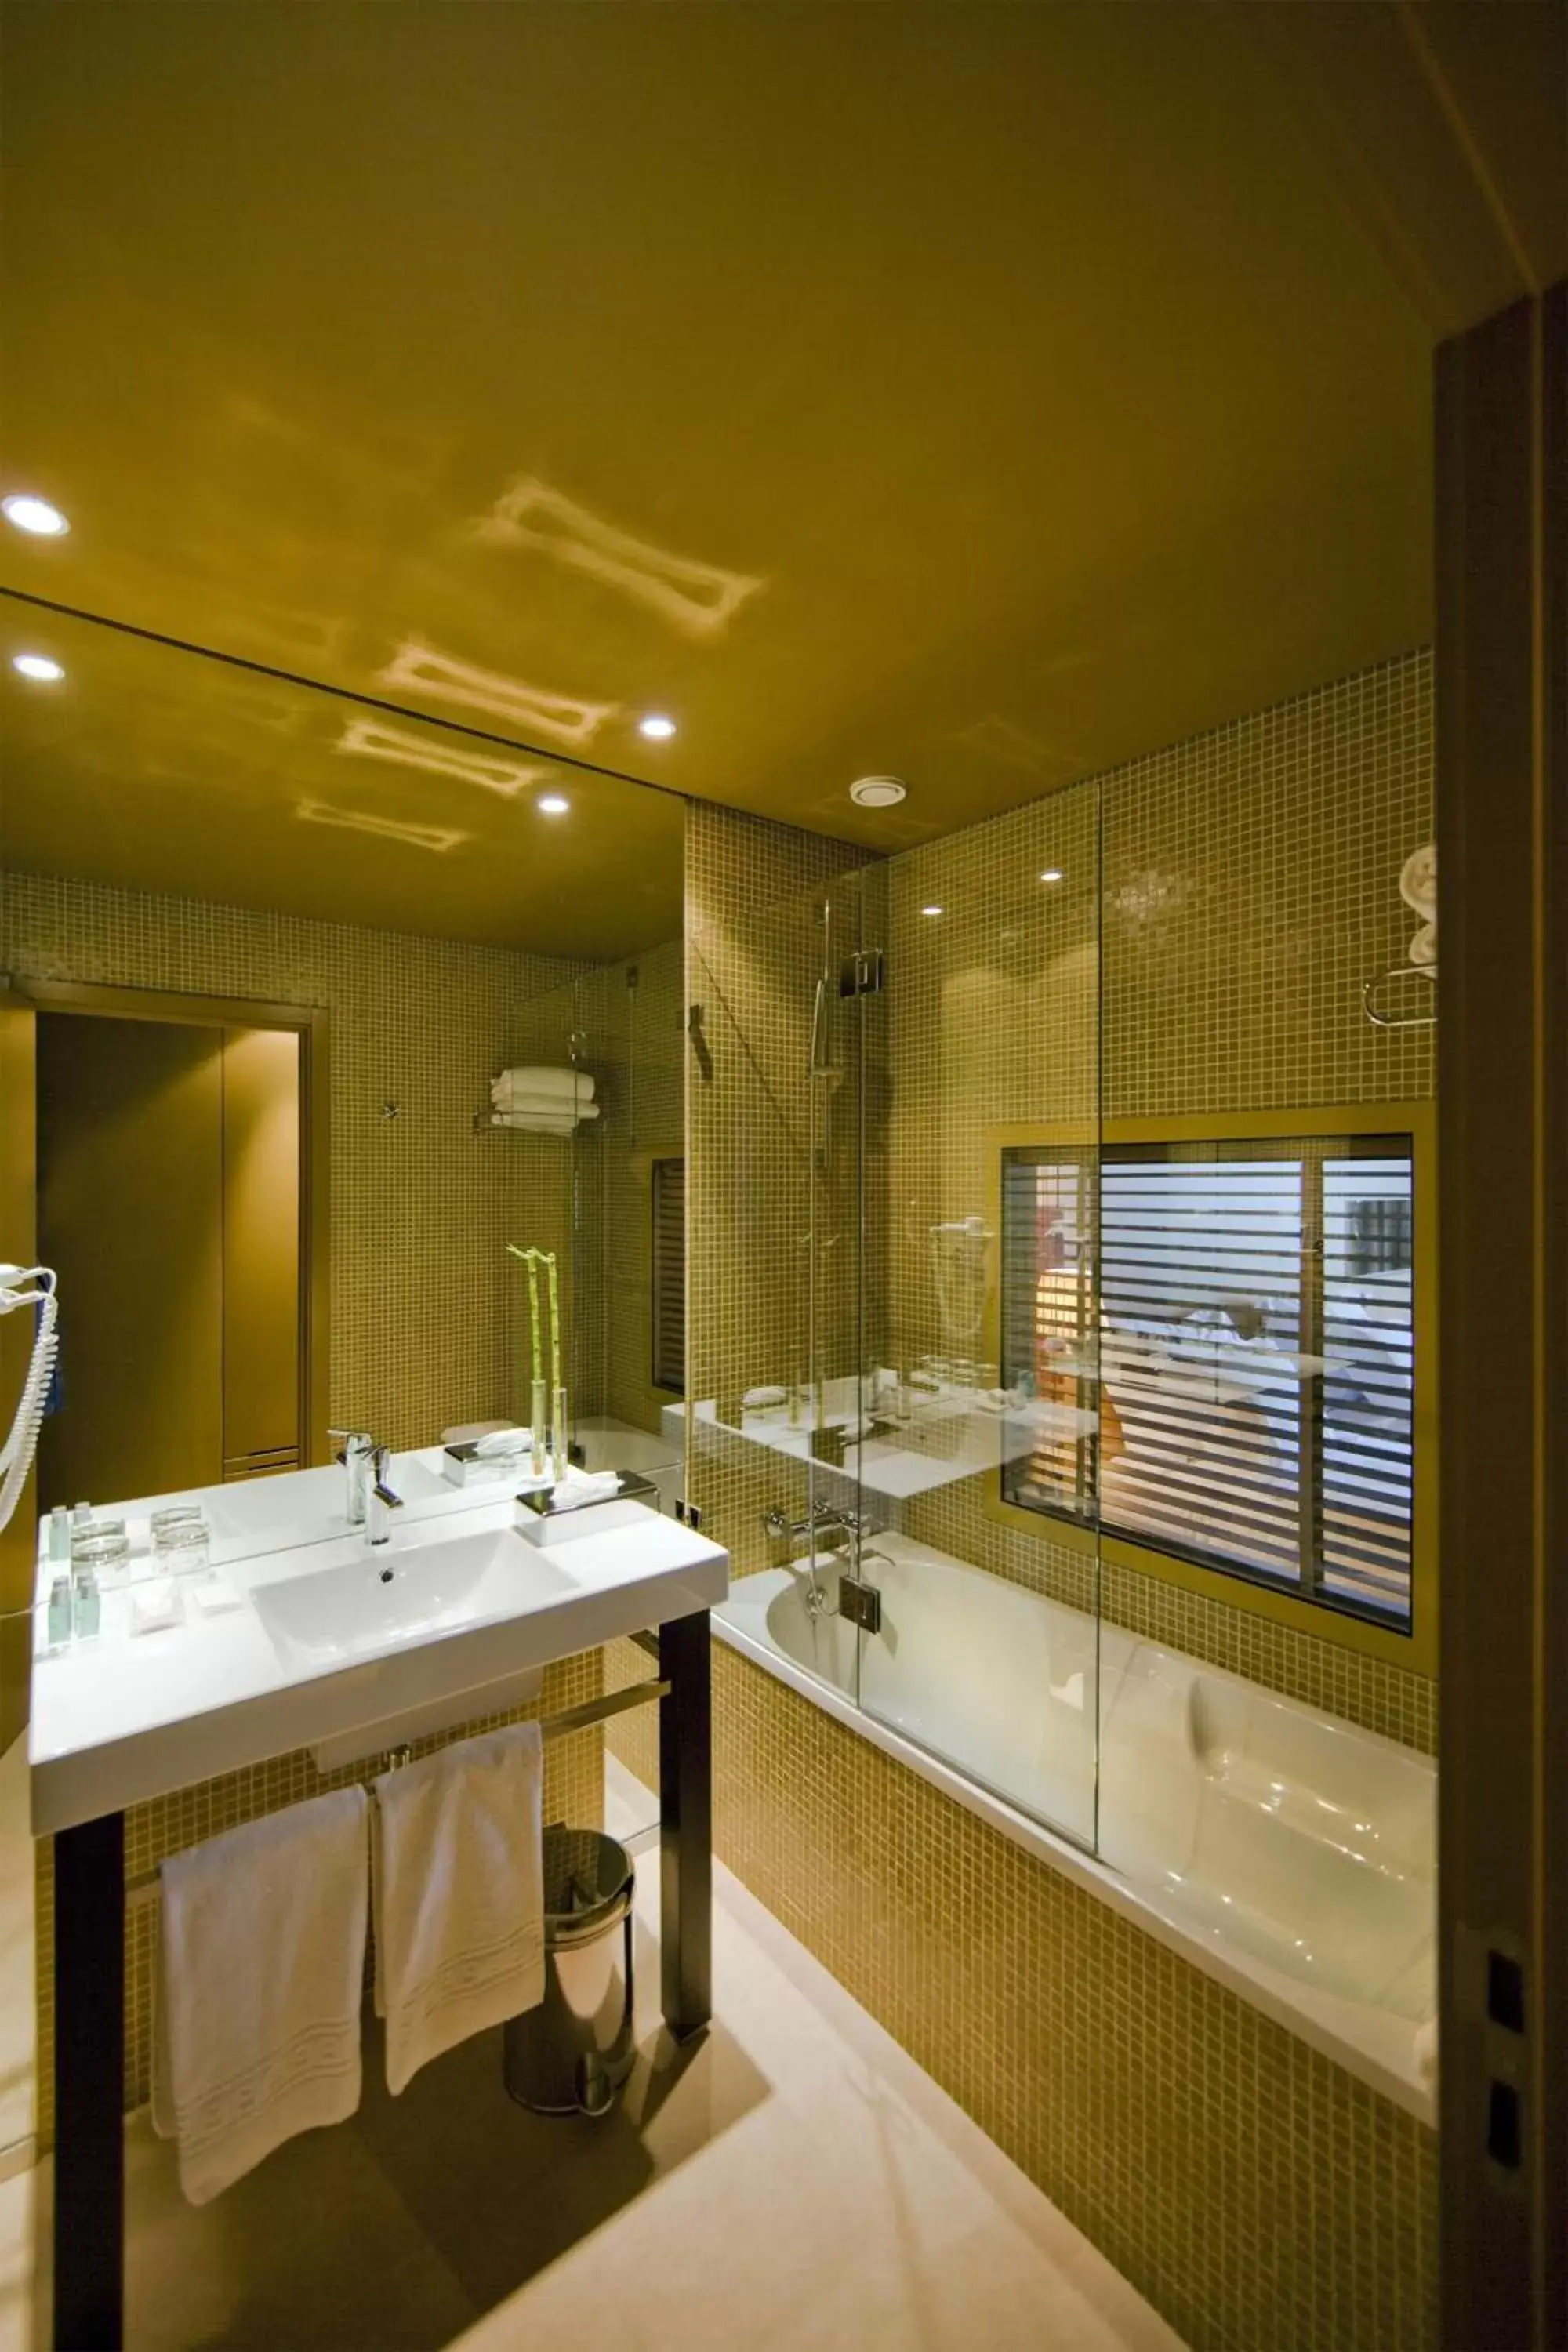 Bathroom in Pestana Palacio do Freixo, Pousada & National Monument - The Leading Hotels of the World